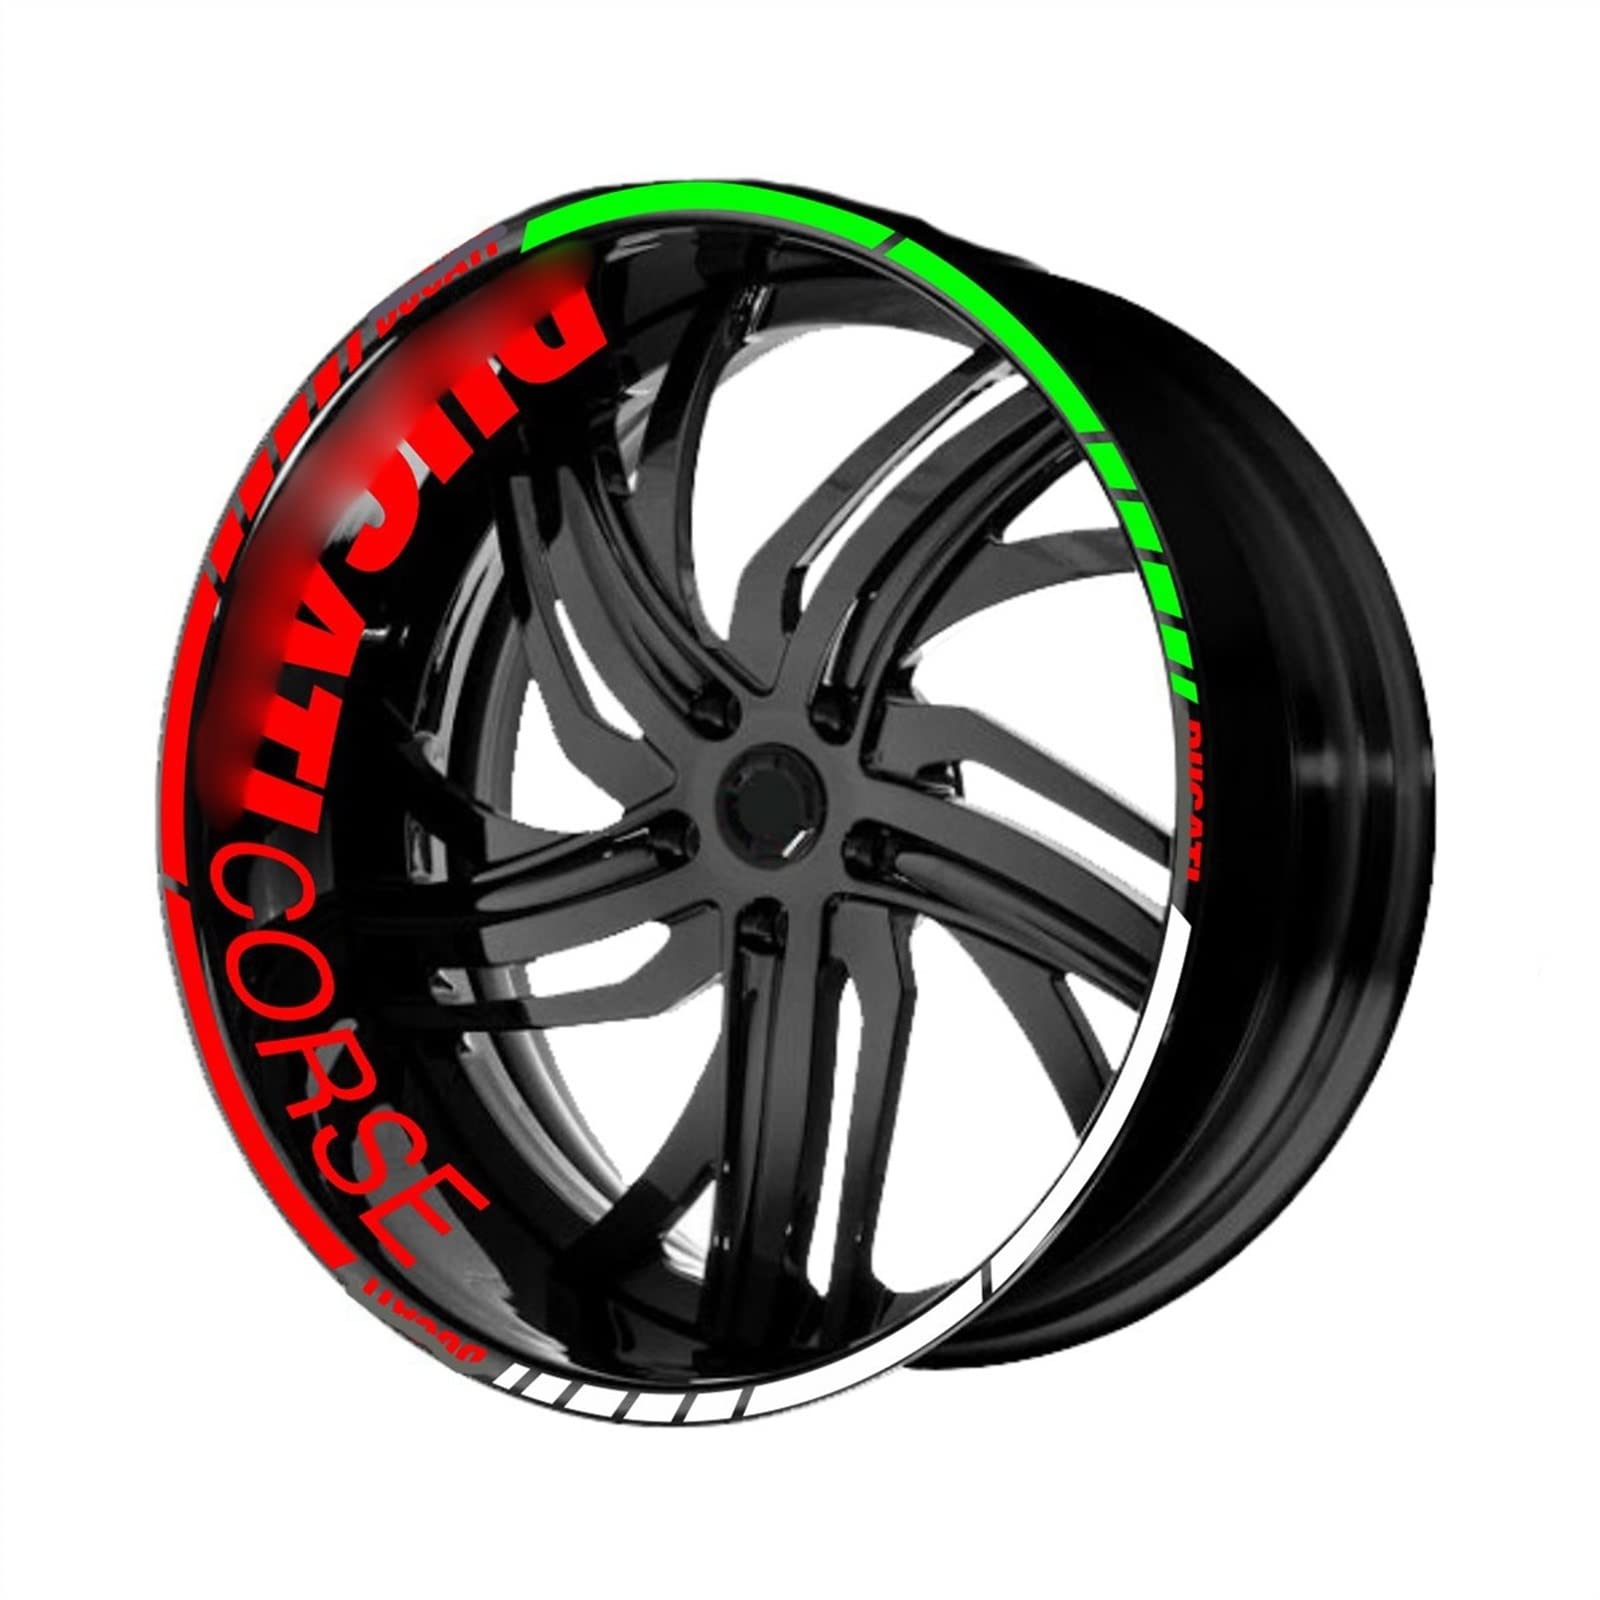 Racing Reflective Für Ducati Rim Sticker Wheel Decal Corse Logo Für Ducati Monster Multistrada Performance Schmücken (Color : Red Tricolor) von STATUZ